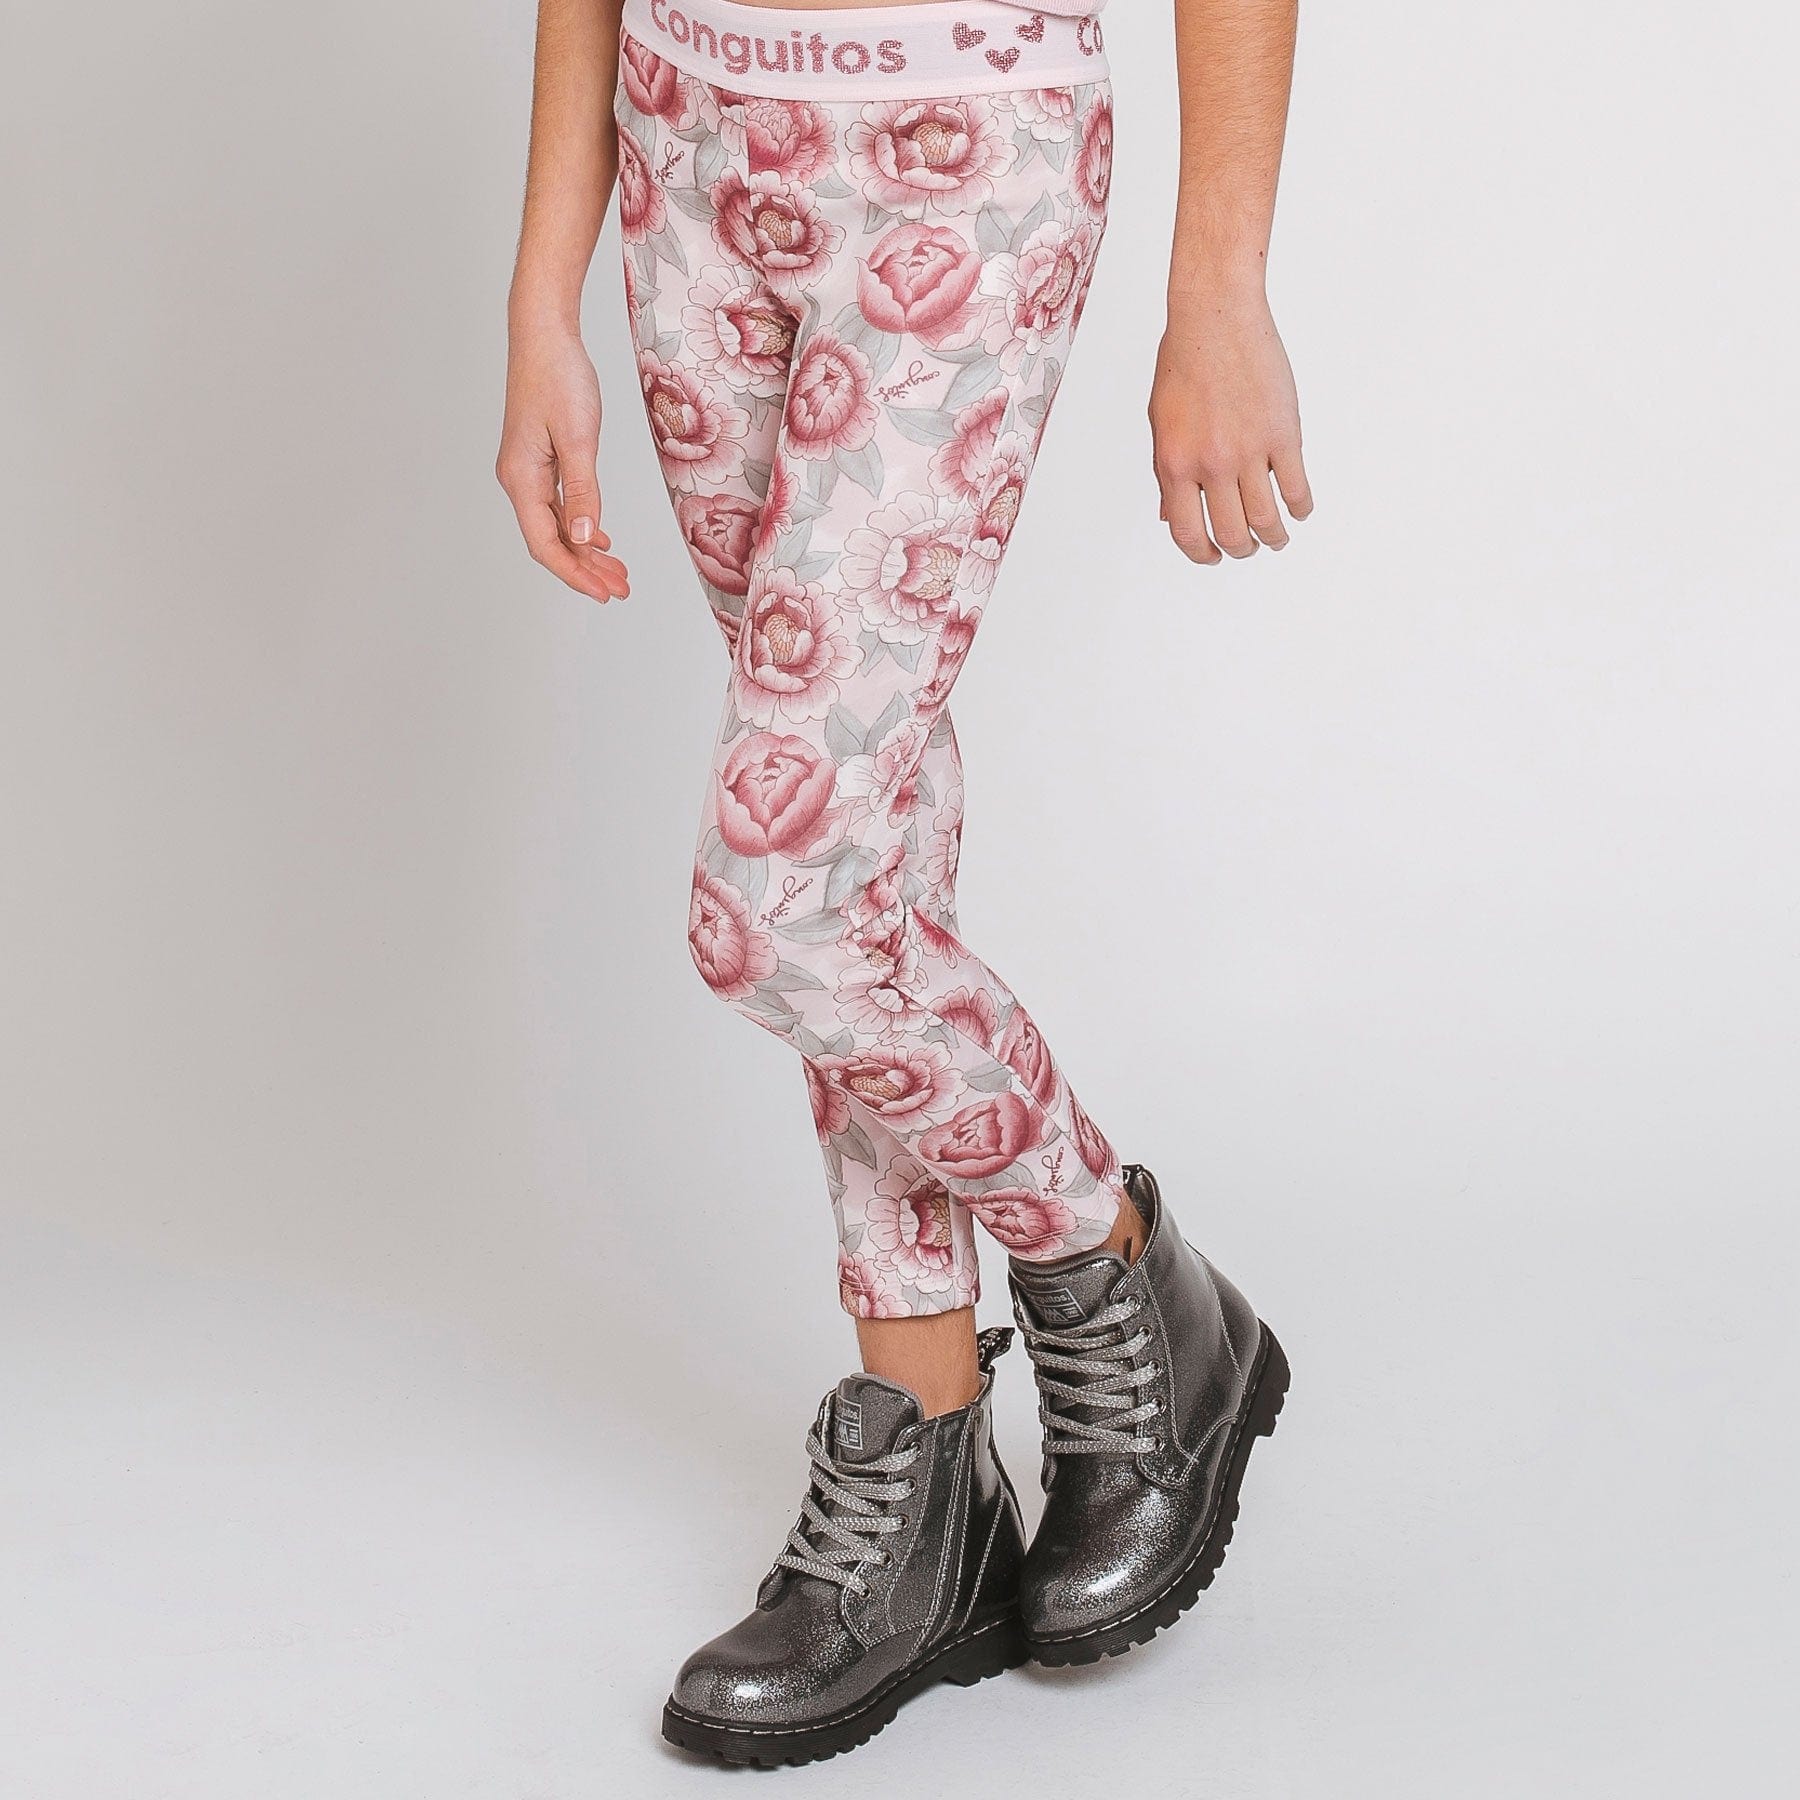 CONGUITOS TEXTIL Clothing Girl's "Pink Rose" Neoprene Leggings